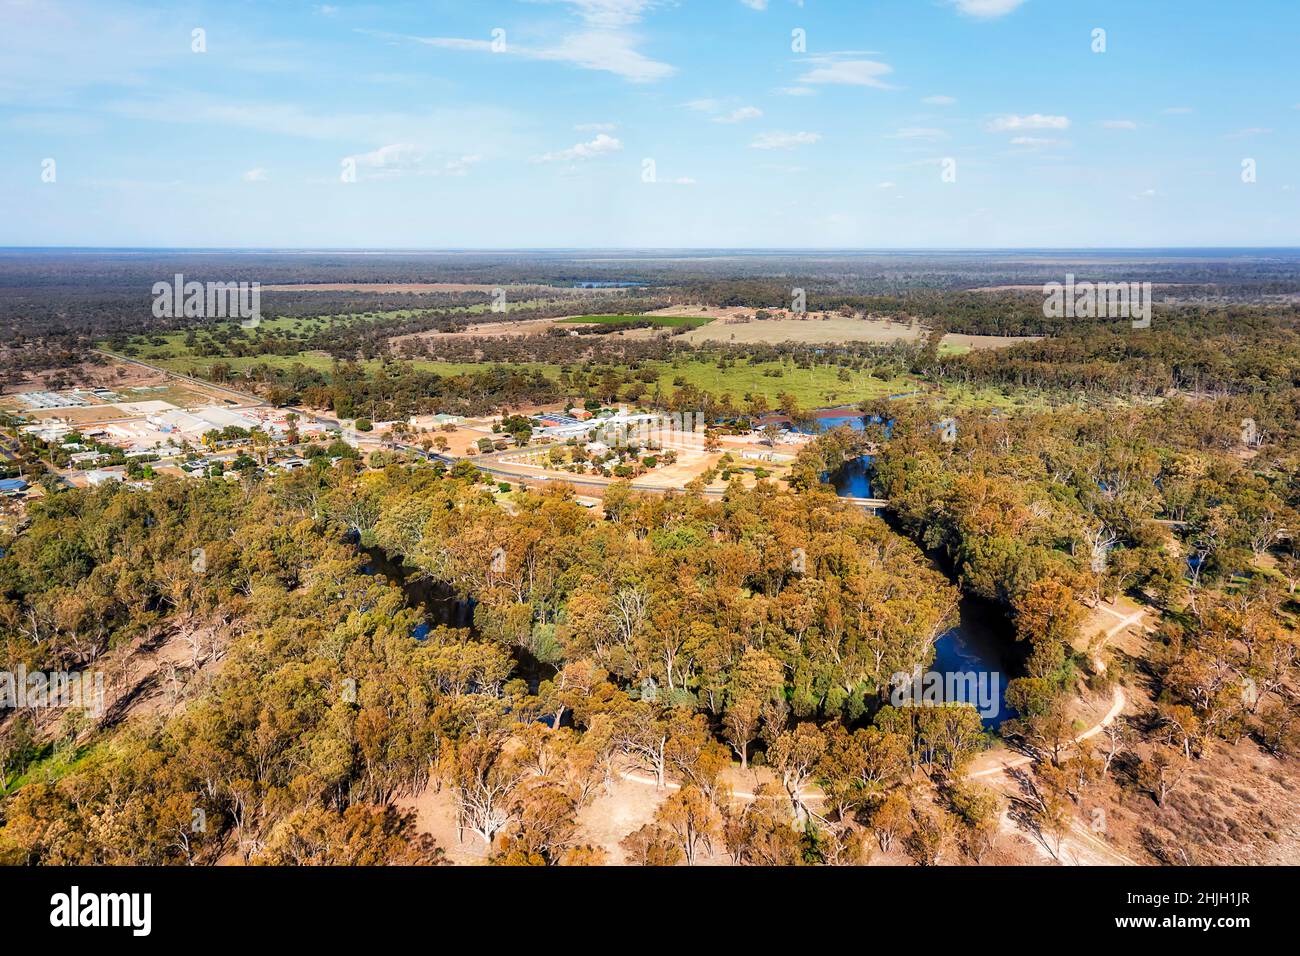 Schleife des Murrumbidgee Flusses um Balranald Stadt in australischen Outback Ebenen - Luftlandschaft. Stockfoto